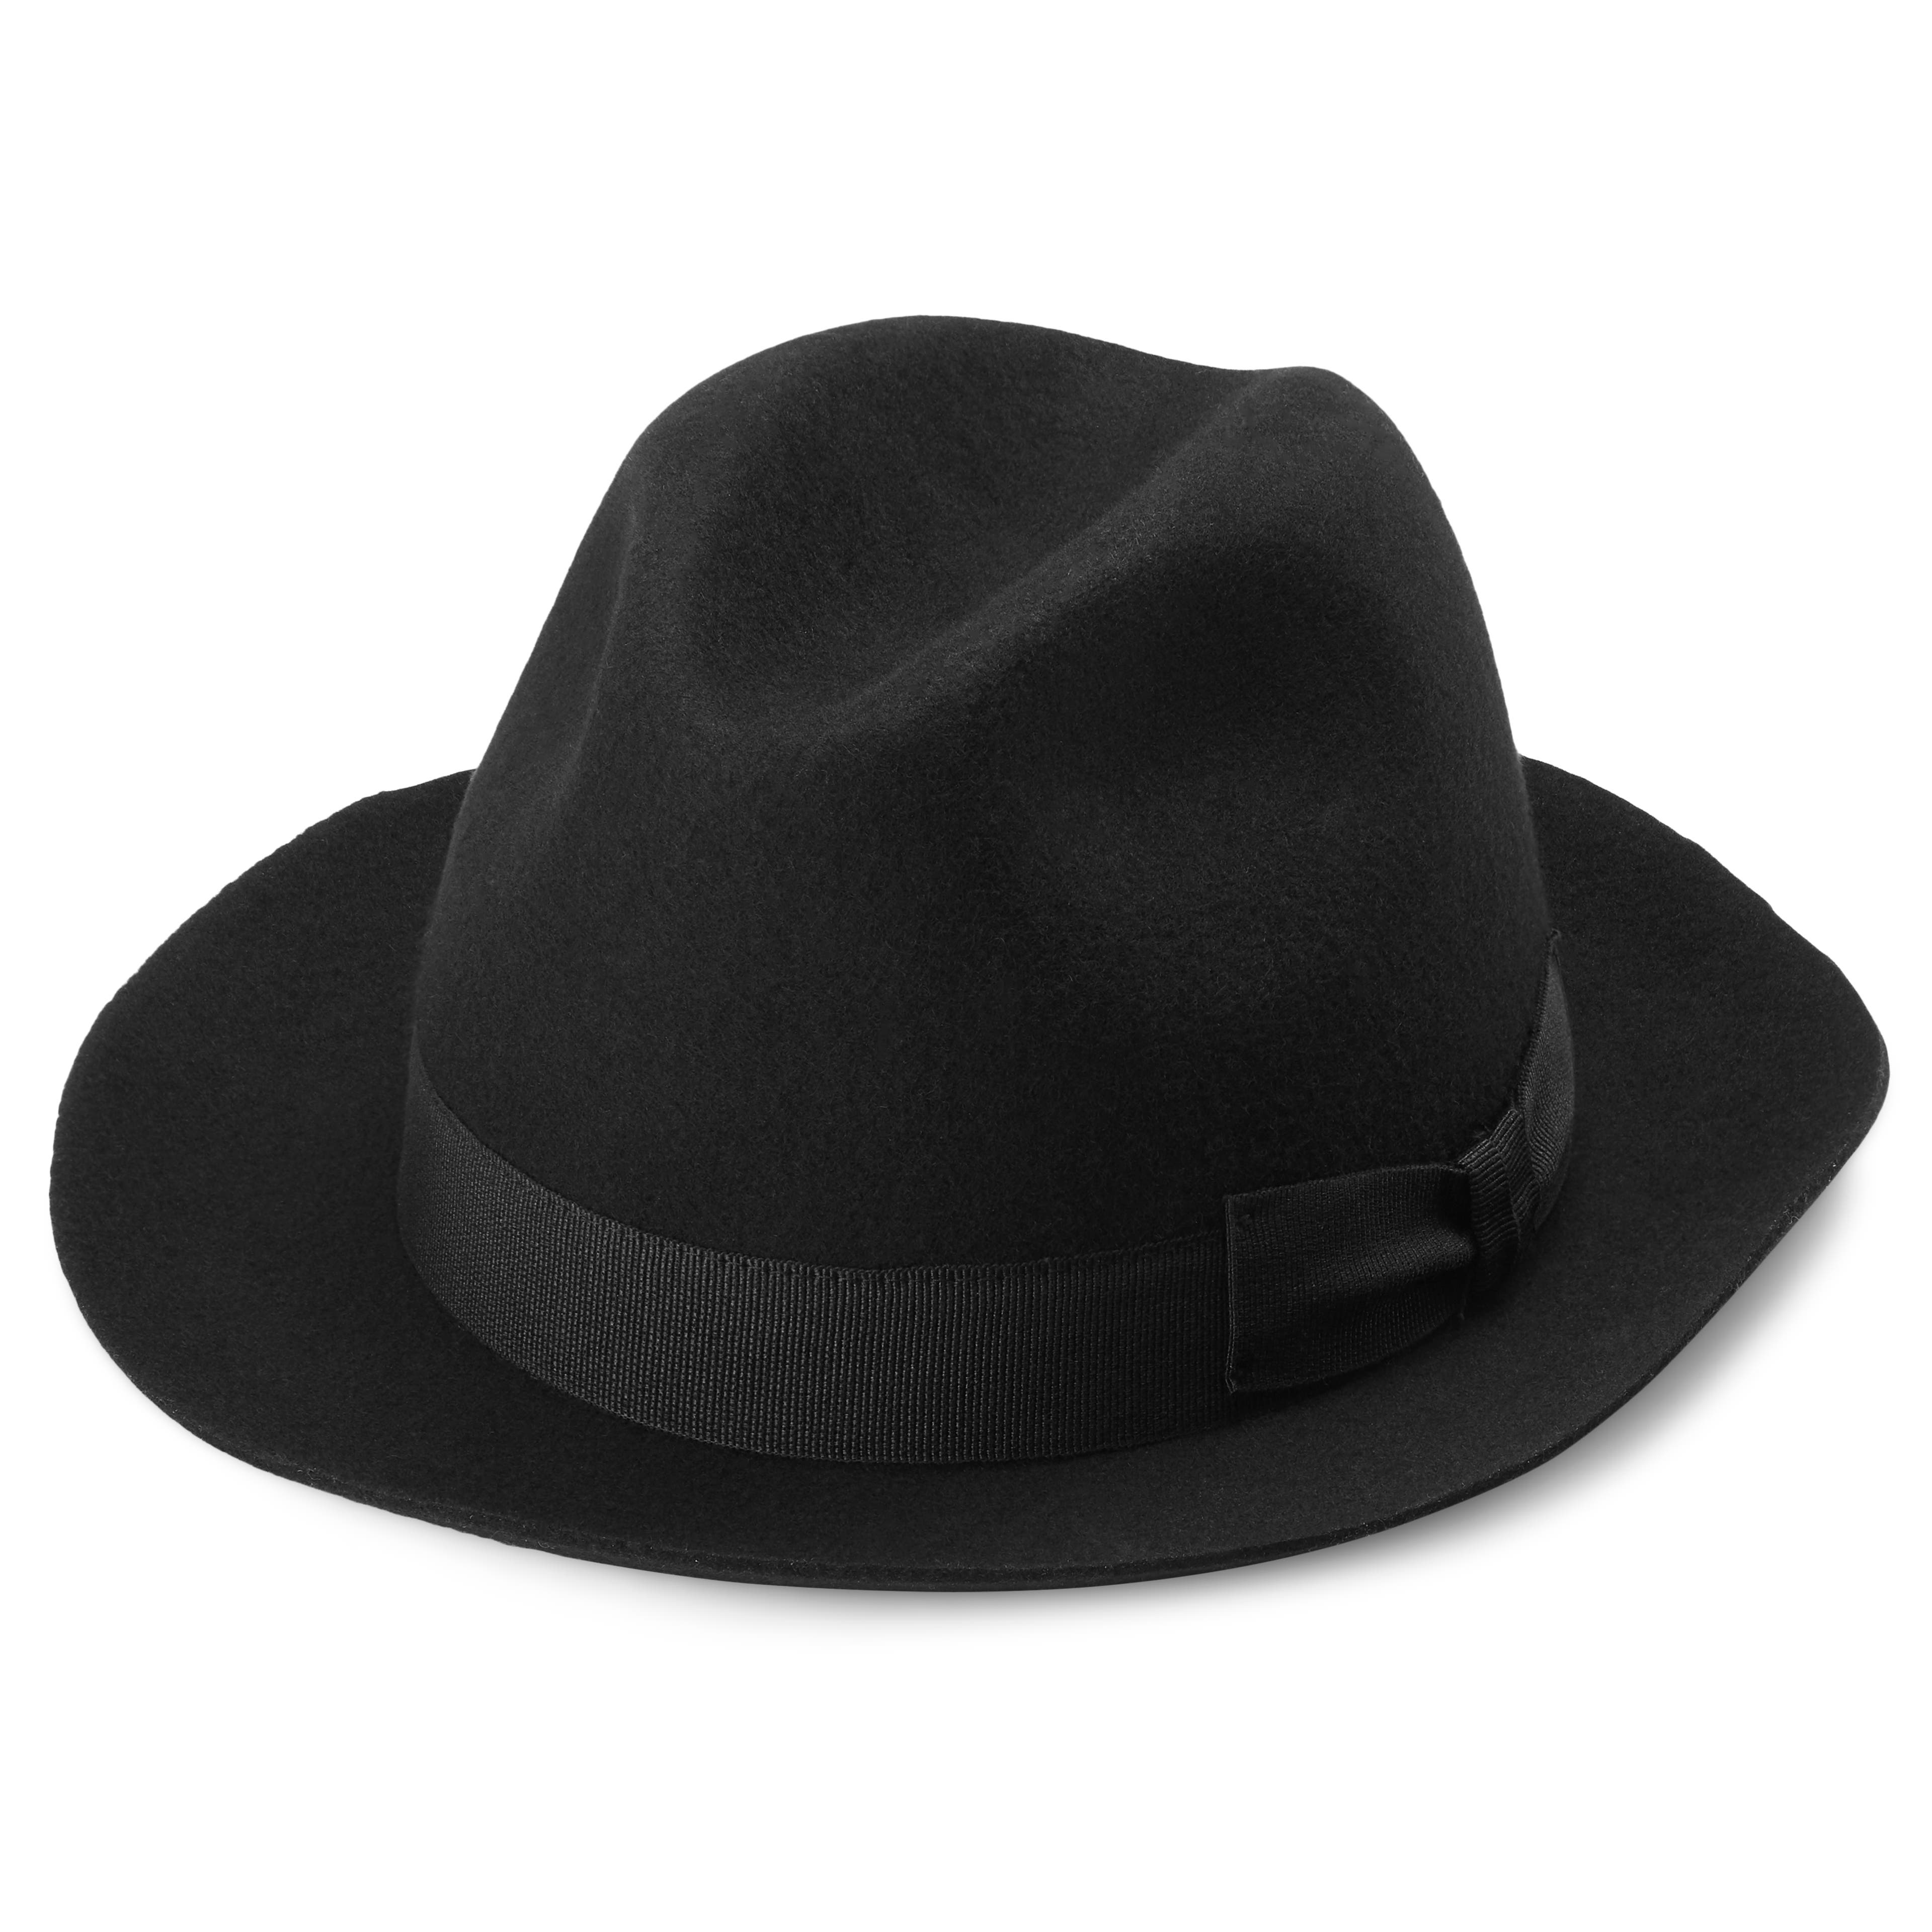 Filippo čierny fedora klobúk Moda s nedokončenými okrajmi 